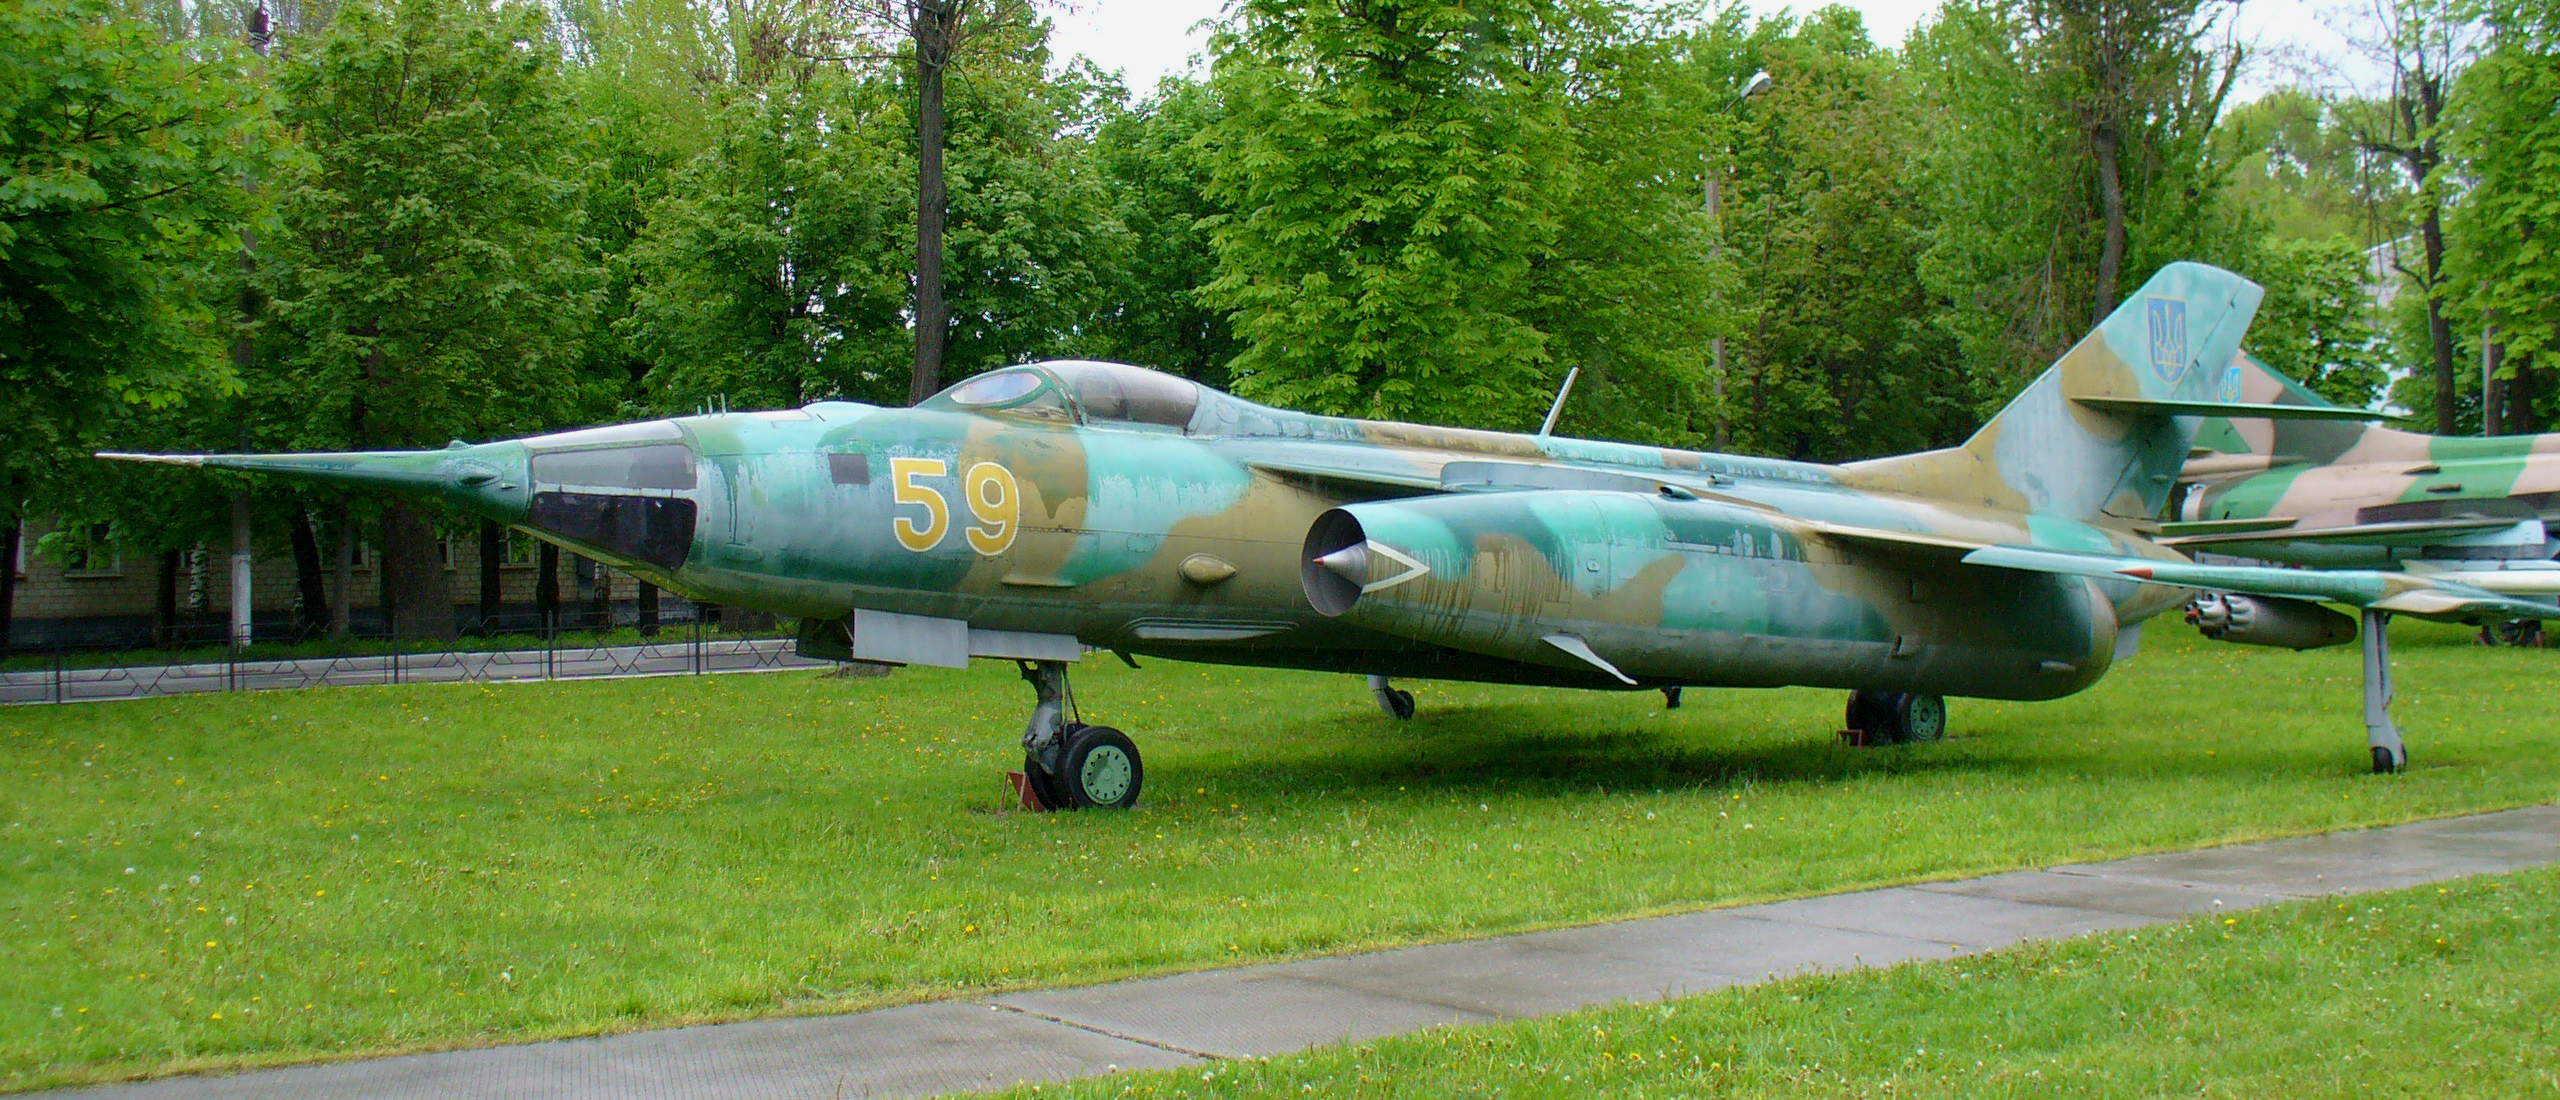 HQ Yakovlev Yak-28 Wallpapers | File 2033.86Kb